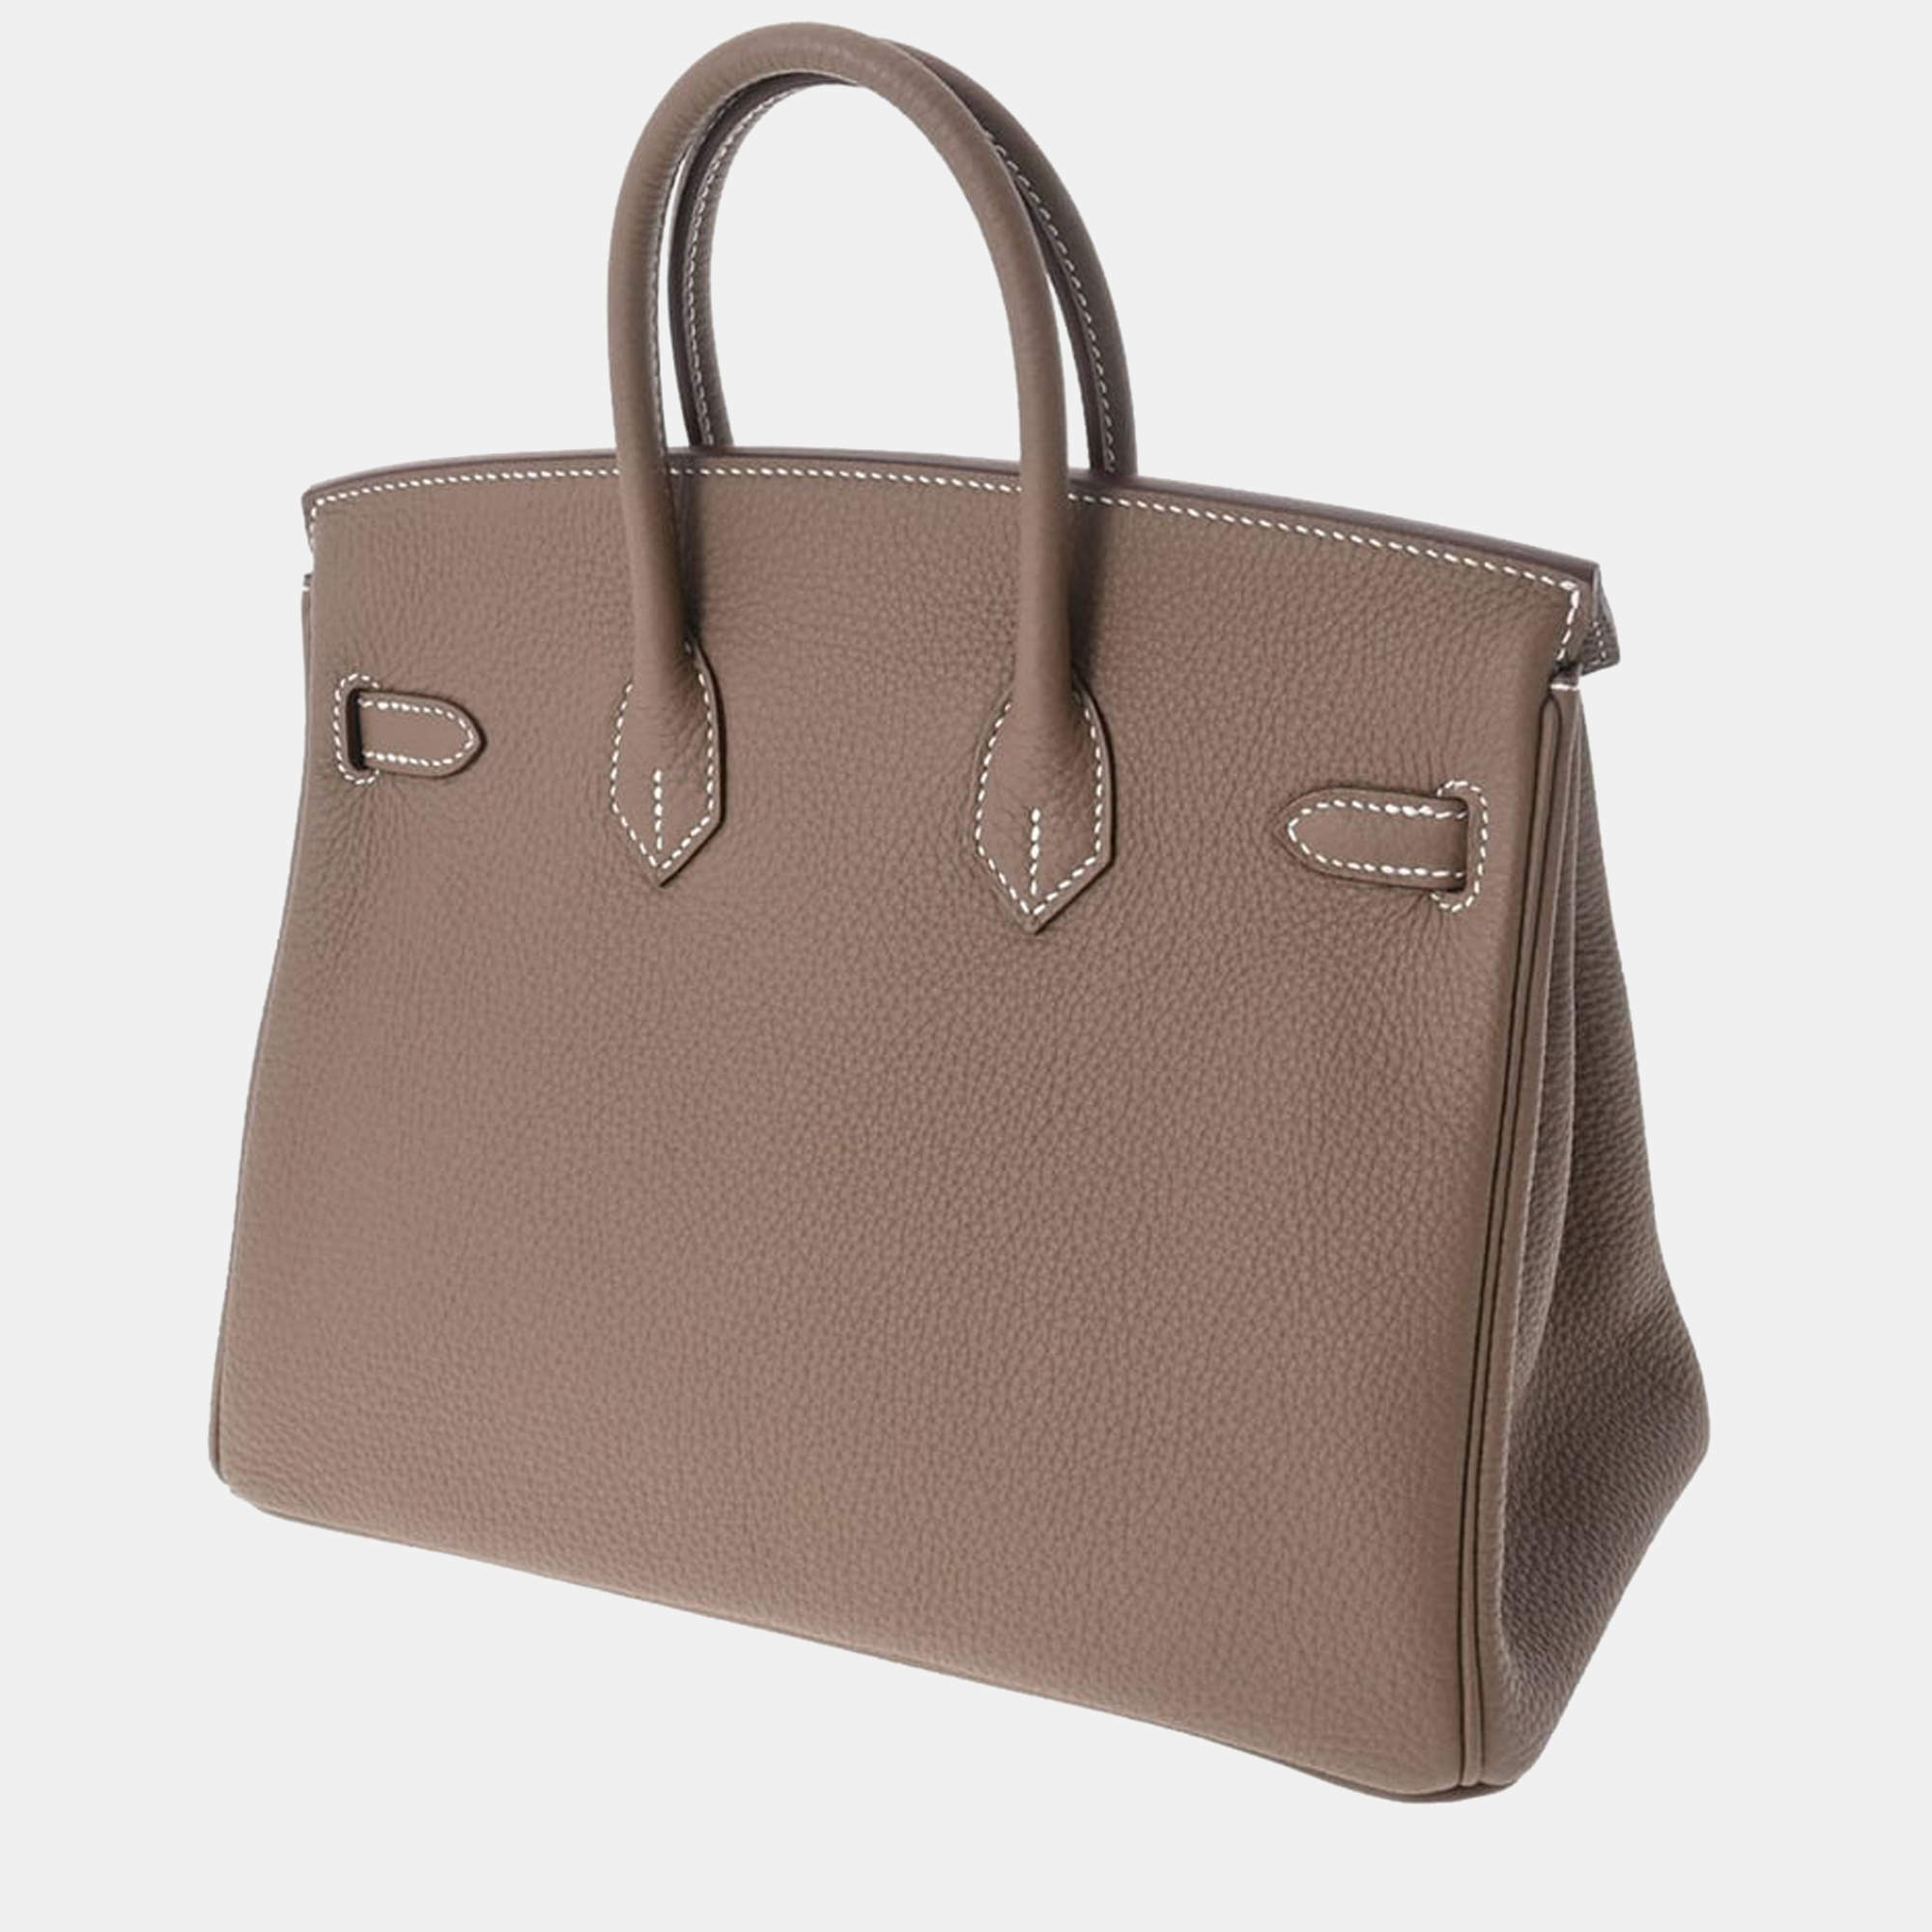 Hermes Birkin 25 Ladies Togo Handbag